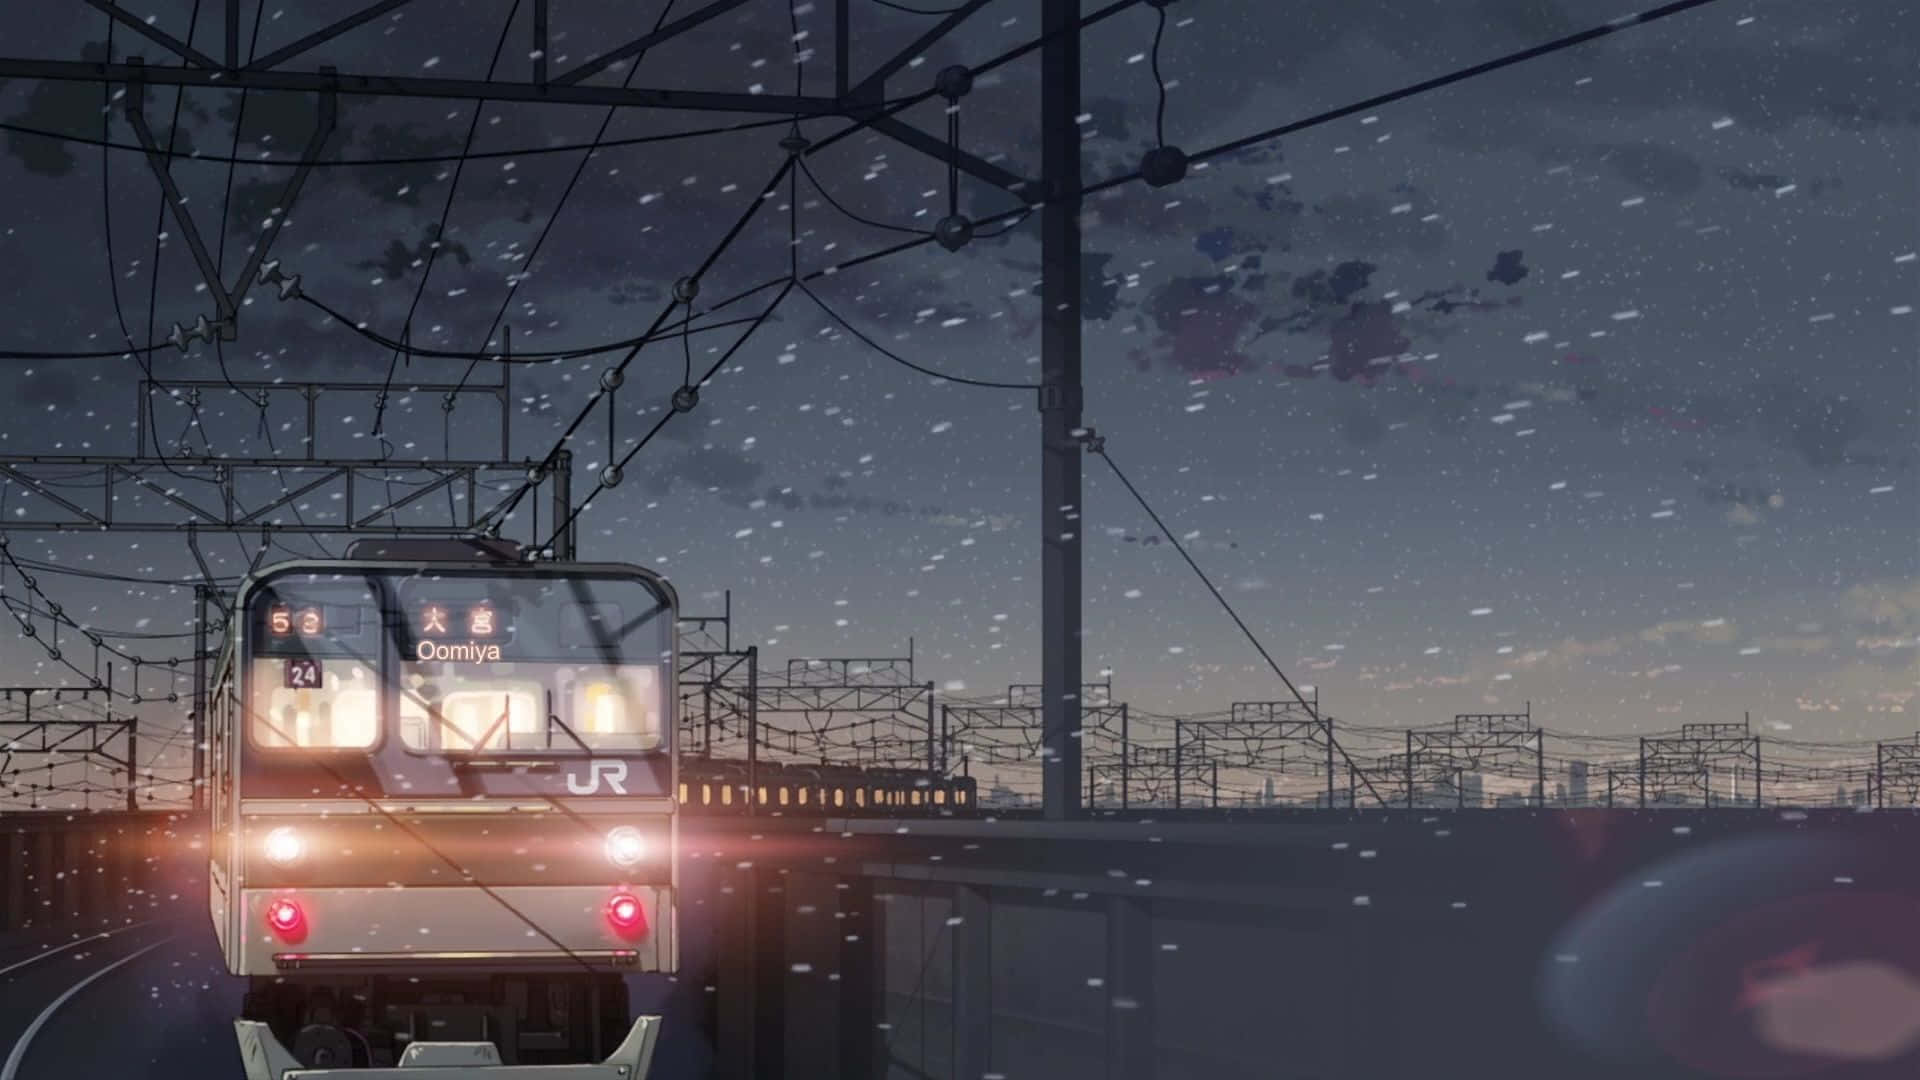 A Creative Image Of Makoto Shinkai, The Inspirational Animator